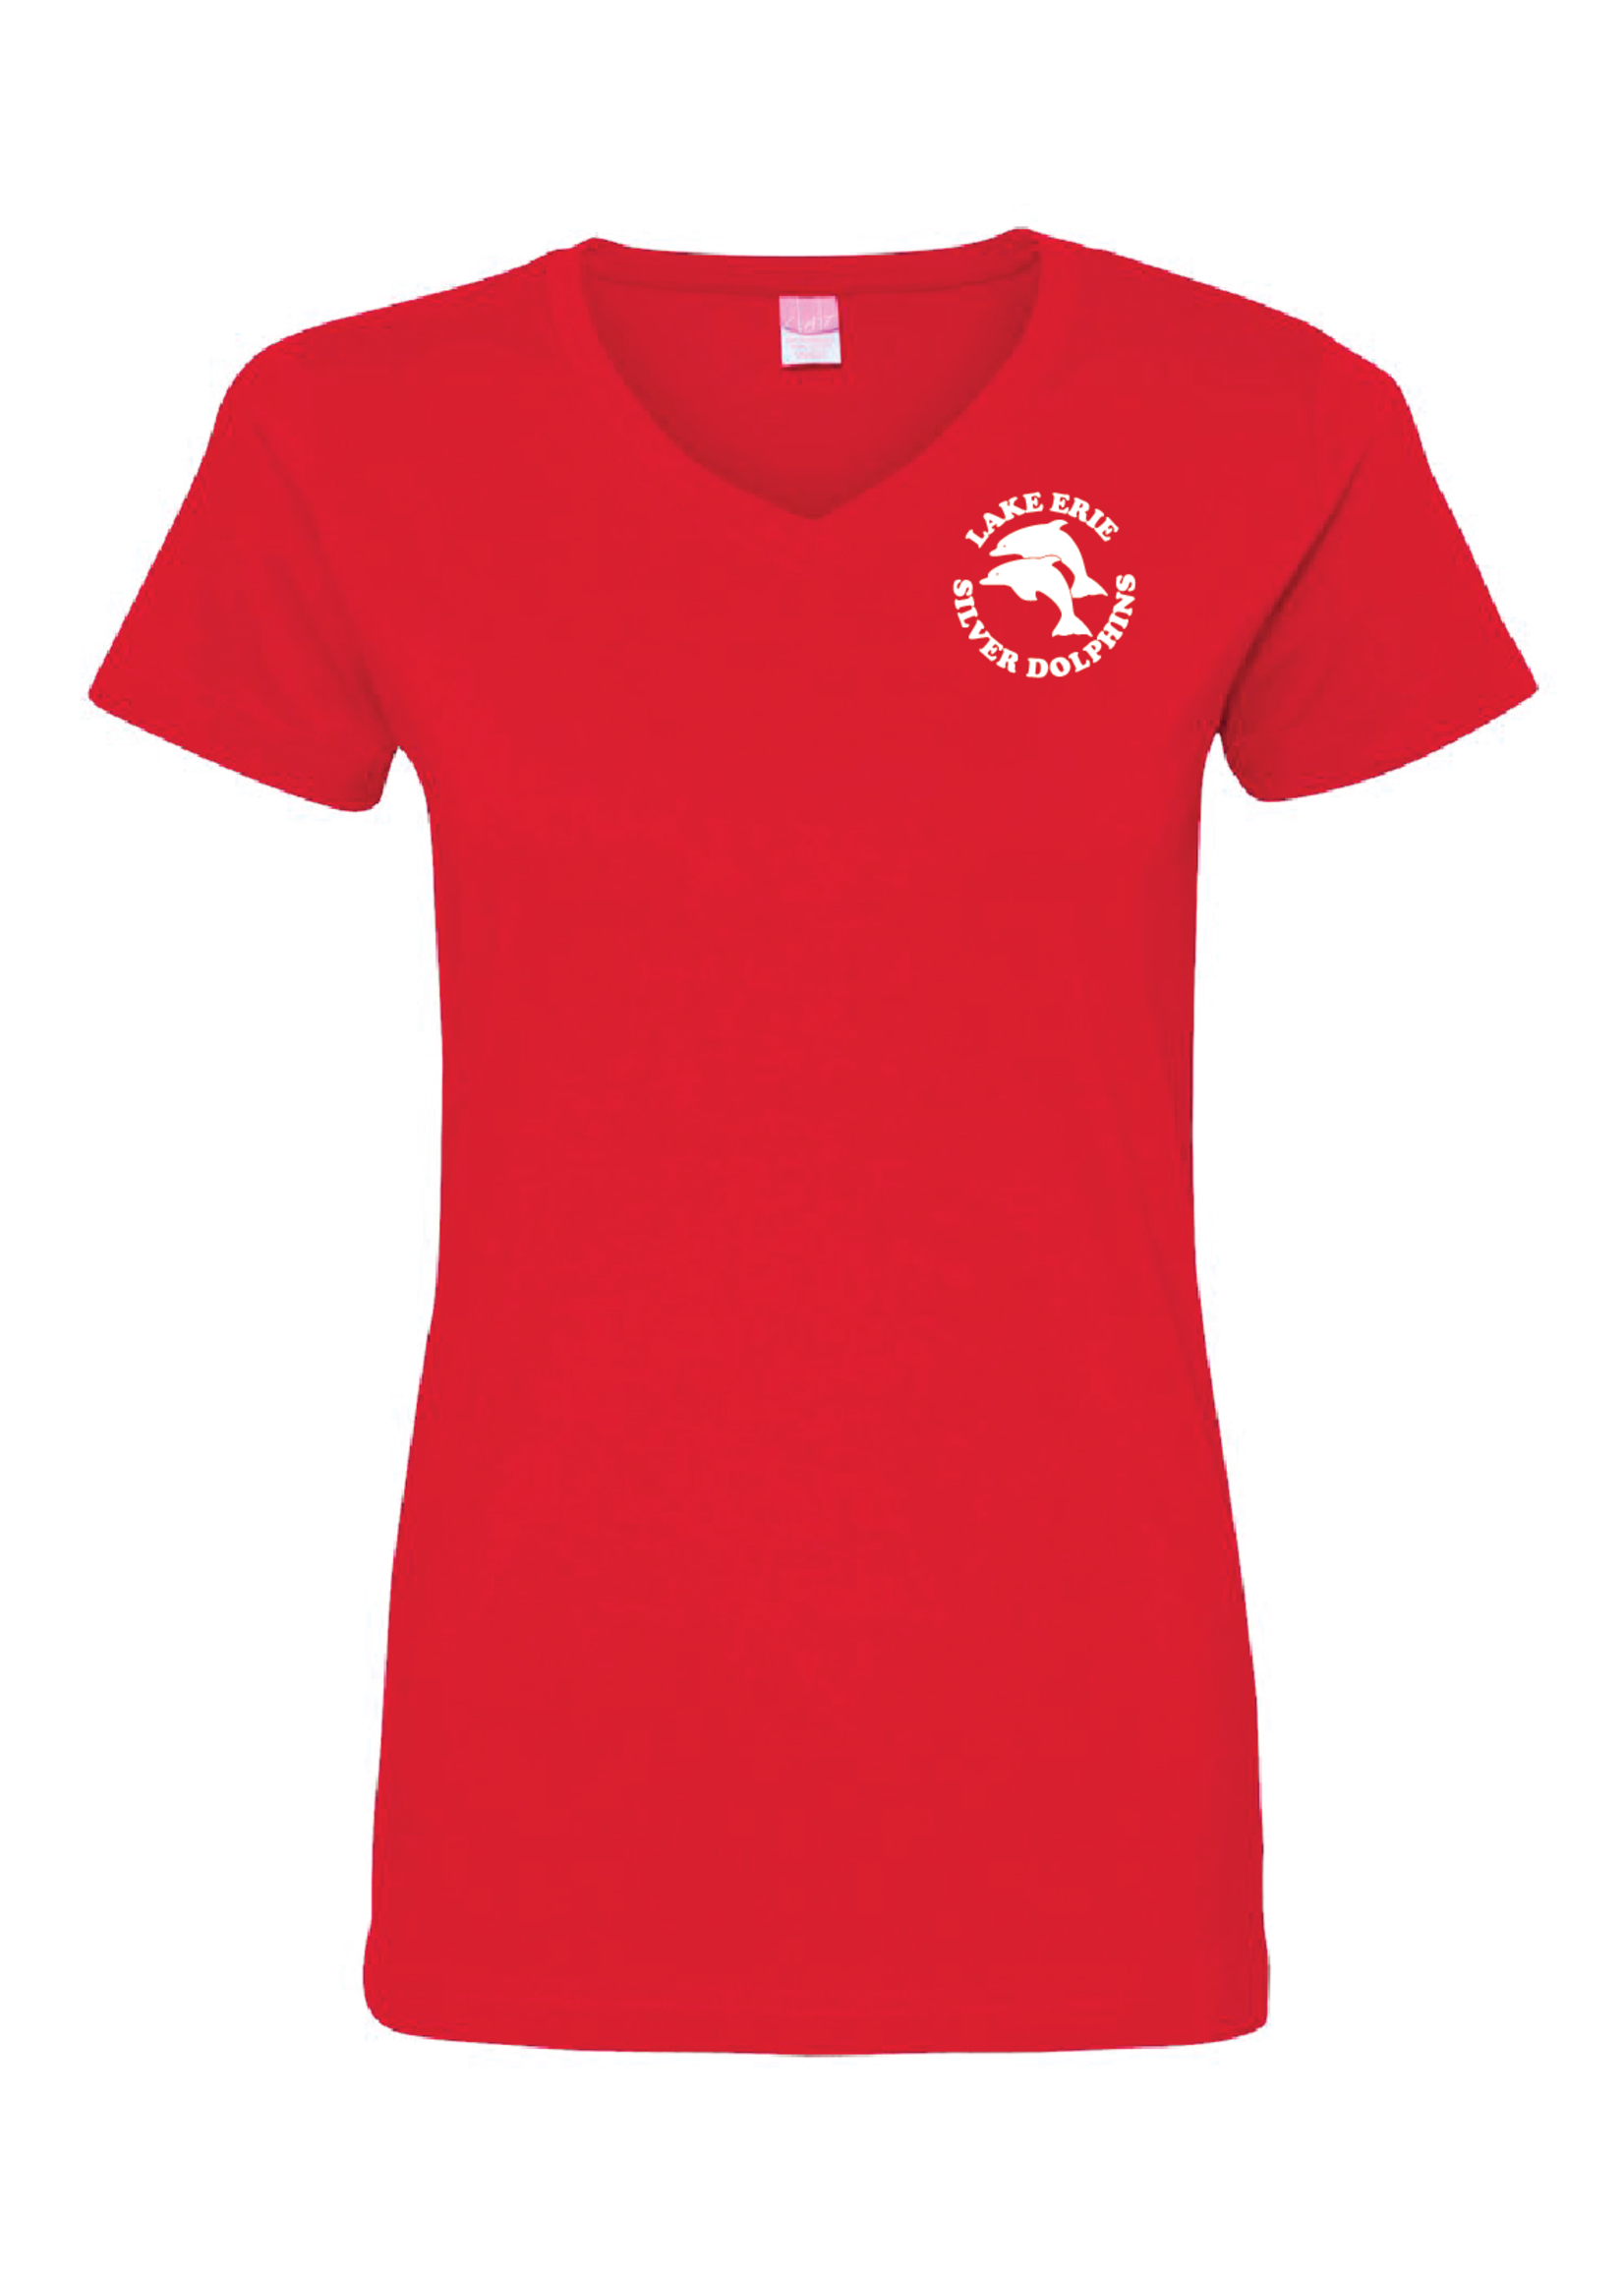 LESD Women's T-shirt